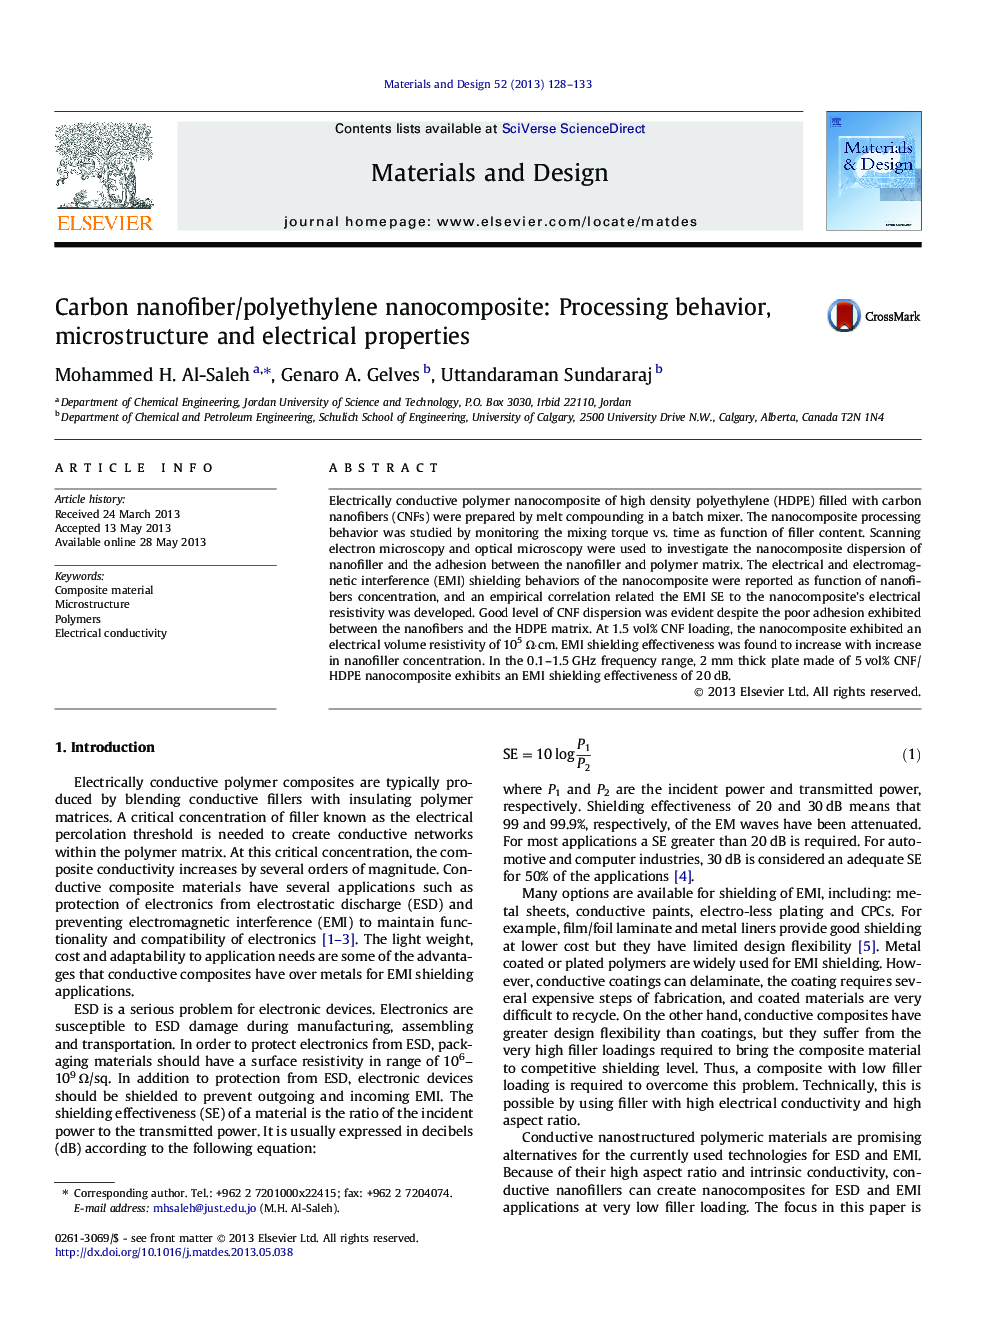 Carbon nanofiber/polyethylene nanocomposite: Processing behavior, microstructure and electrical properties